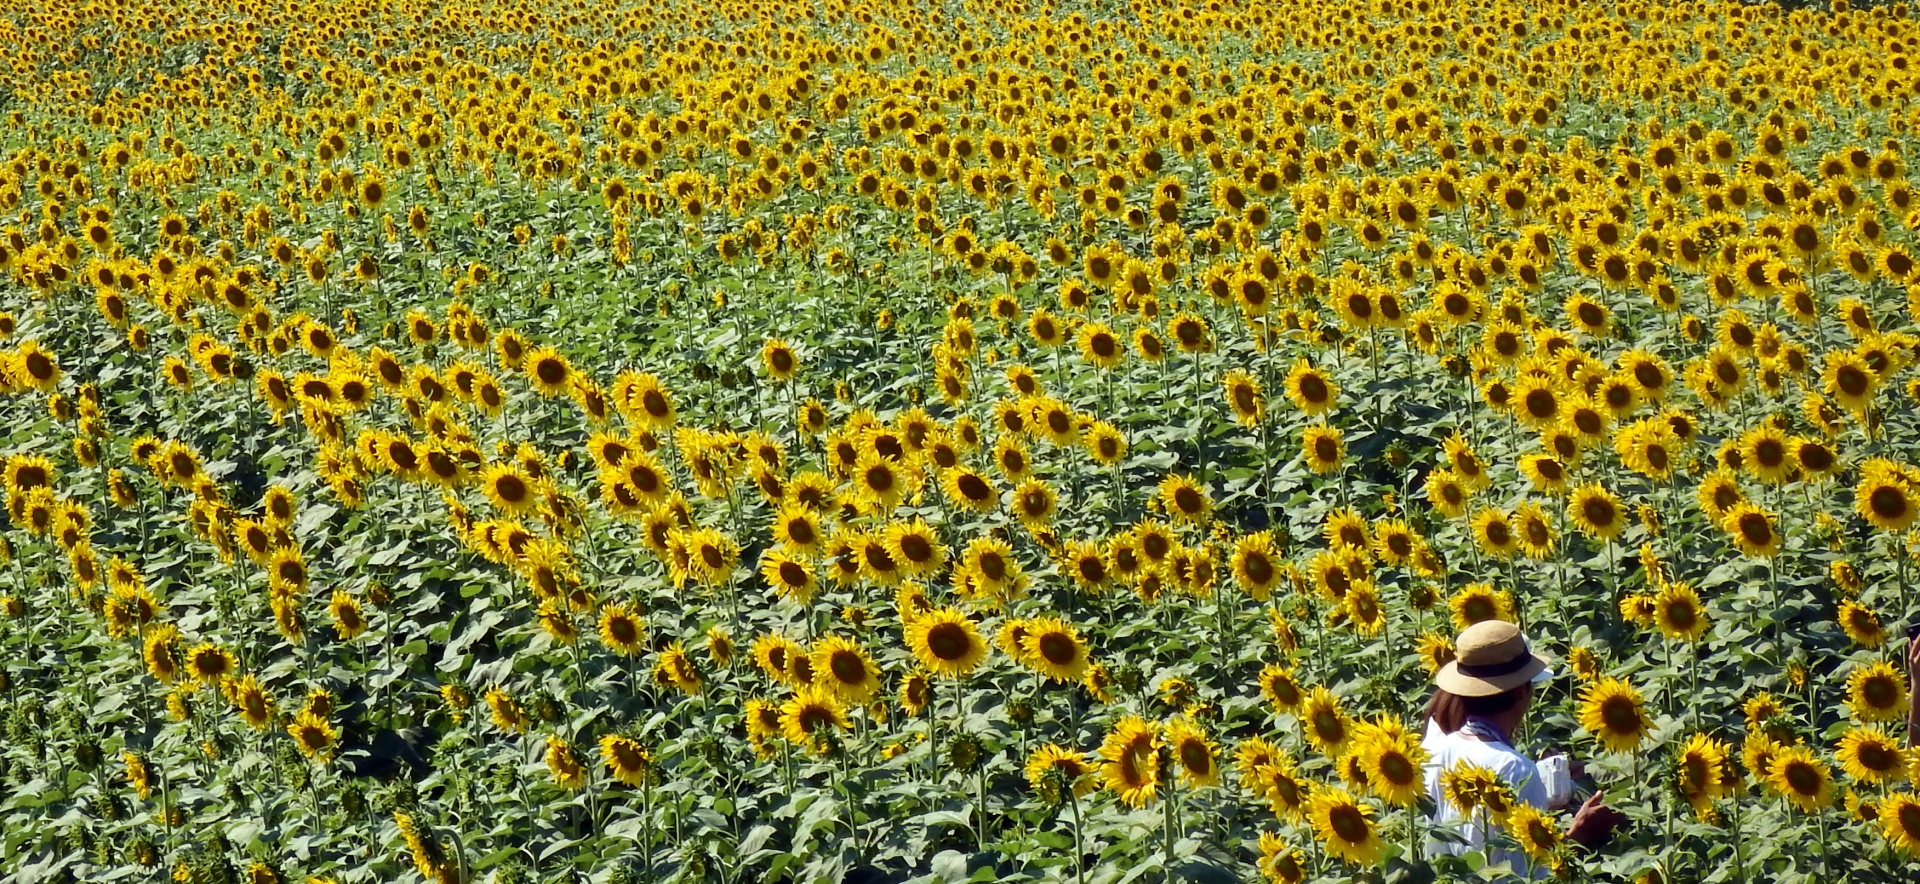 sunflower sunflowers field free photo